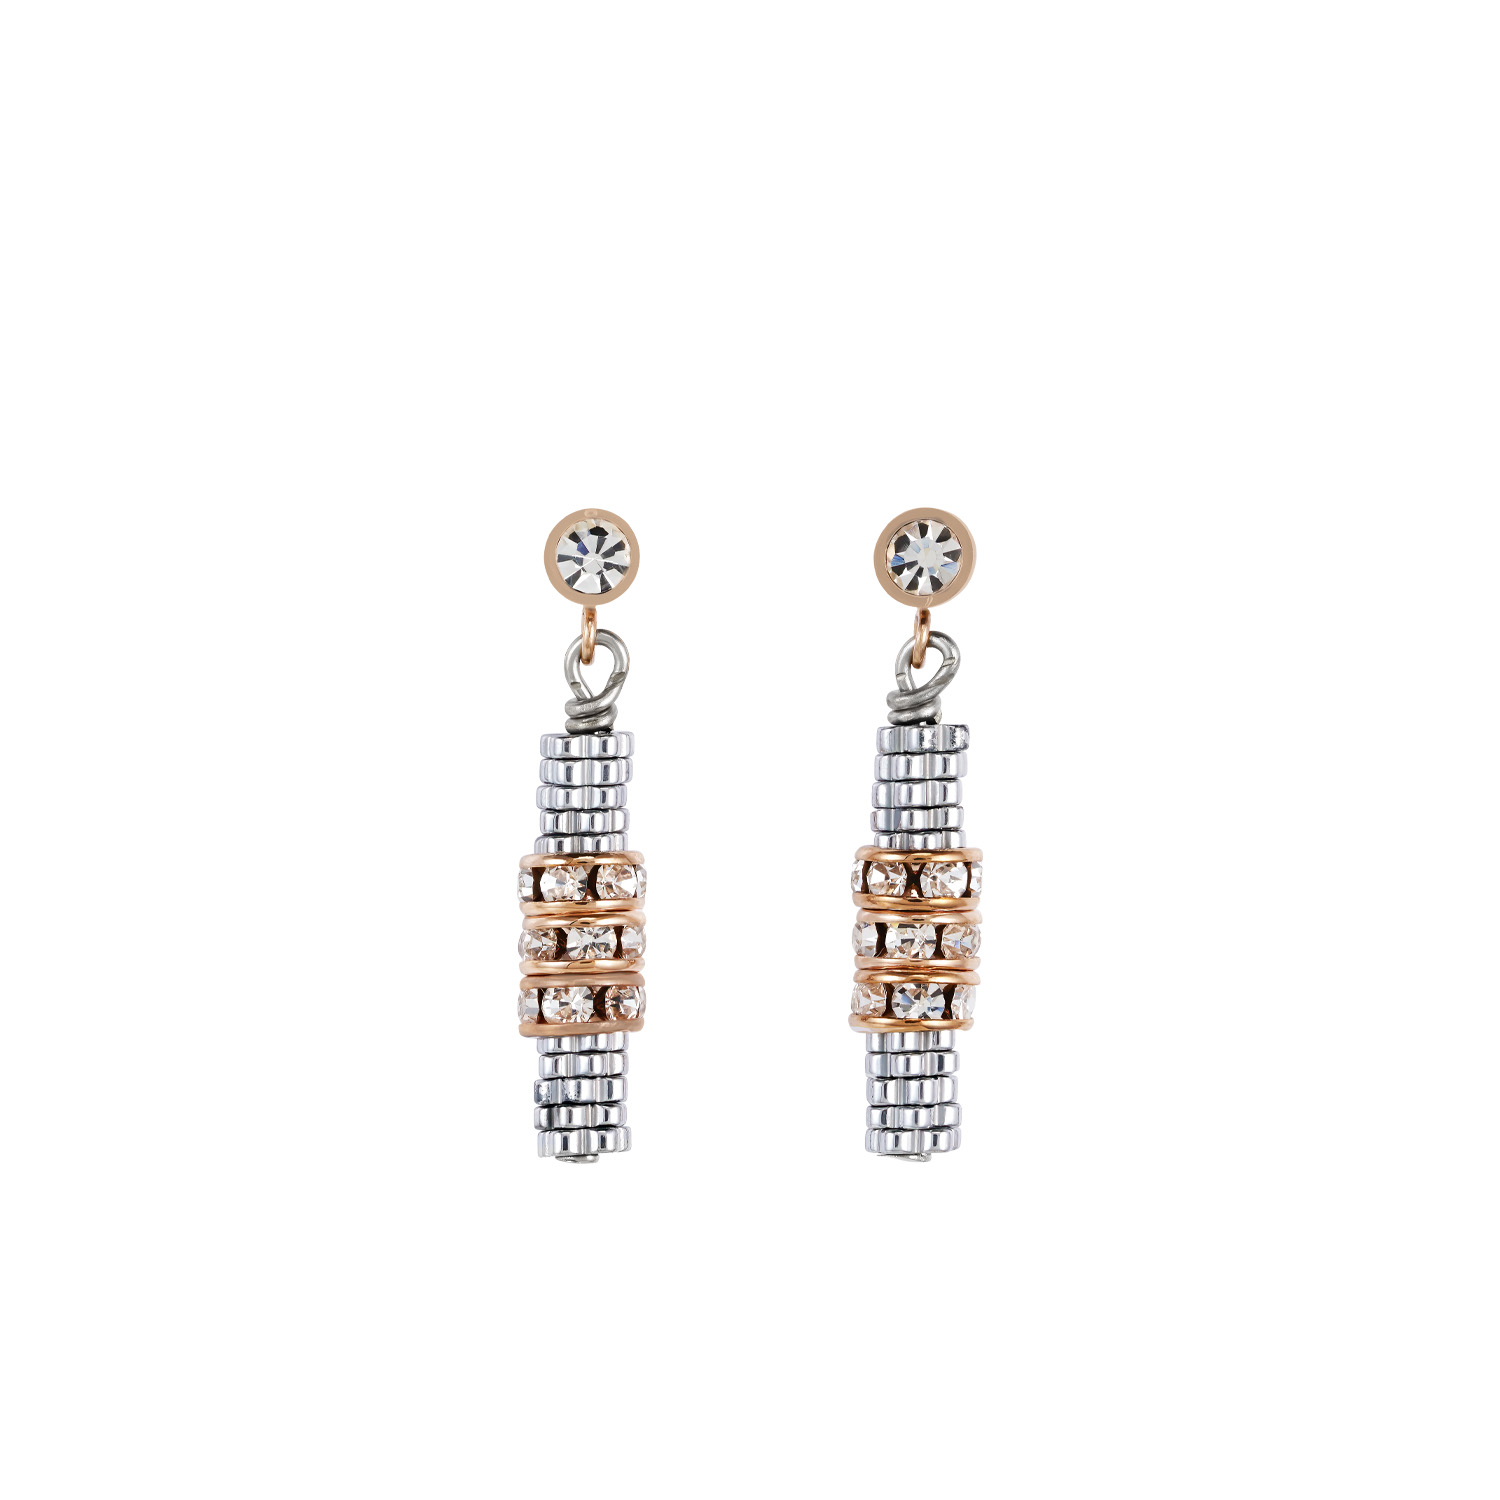 Wholesale OEM/ODM Jewelry UK Custom made 925 silver earrings cubic zirconia fashion jewelry wholesaler